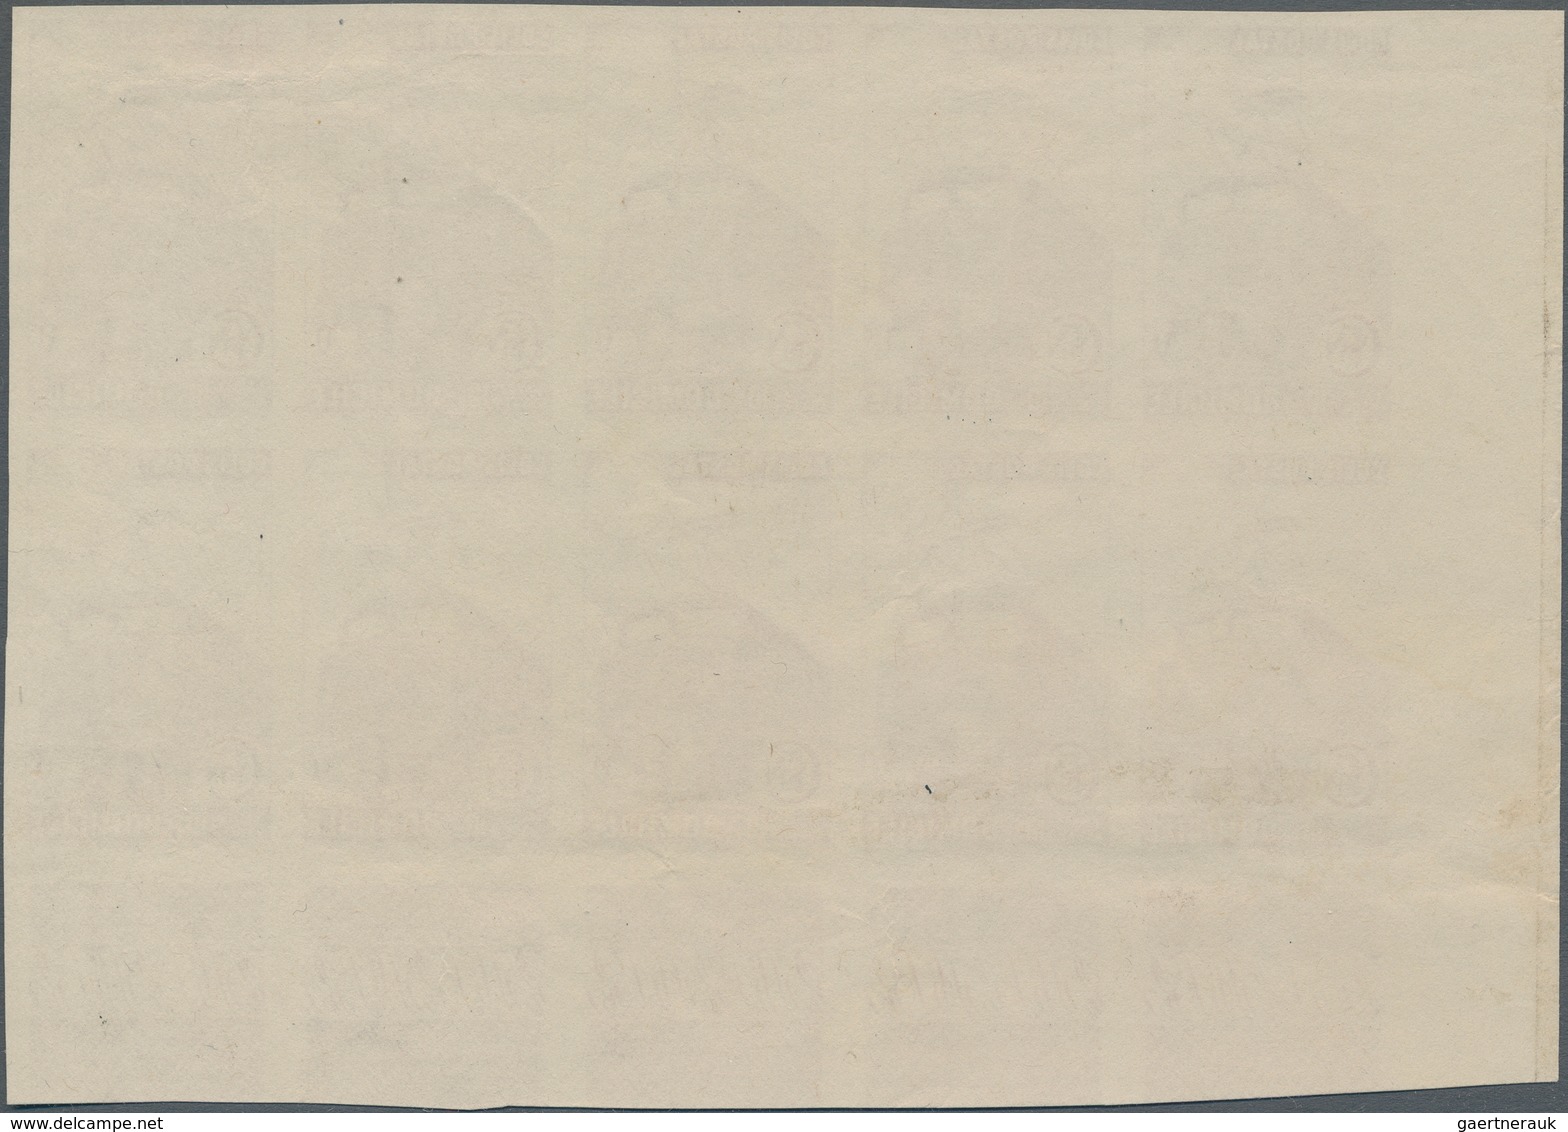 Frankreich - Postpaketmarken: 1945, Timbres De Prestation, Not Issued "Domicile" Claret With Blank V - Altri & Non Classificati